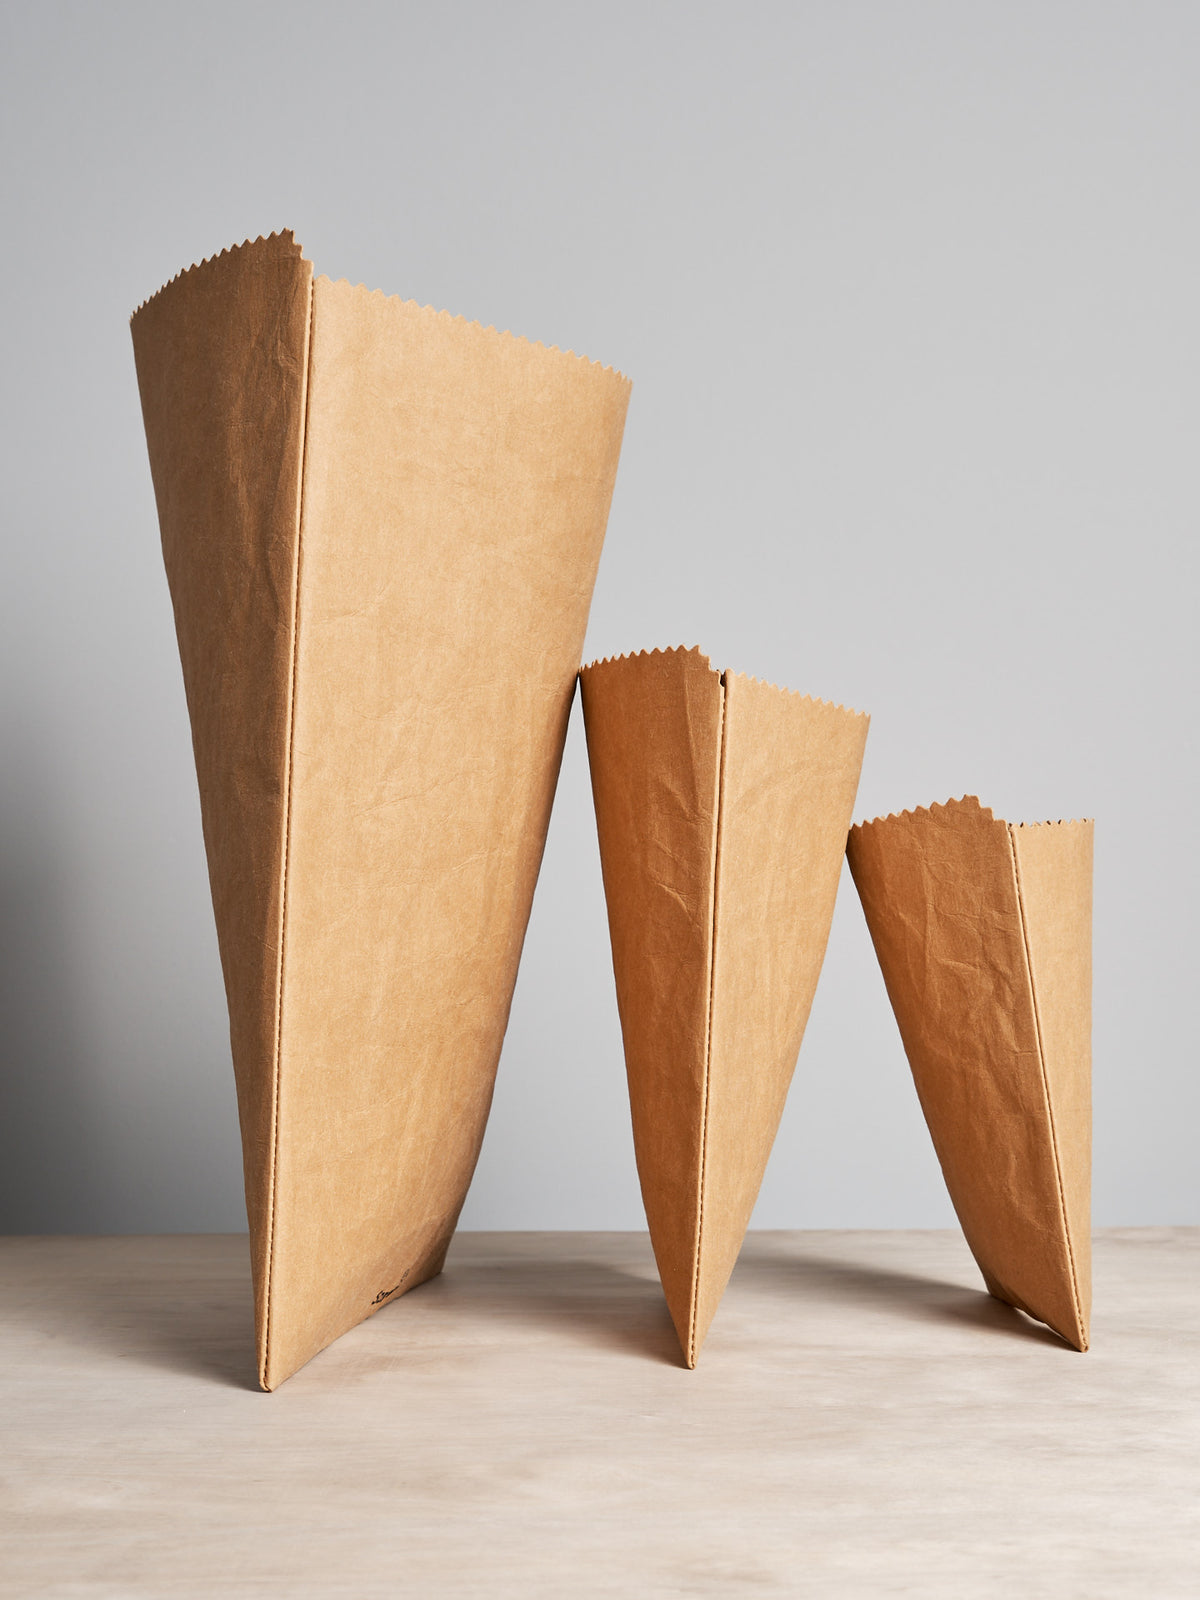 Three Sammy Bags Reusable Flat Bag – XL on a wooden table.